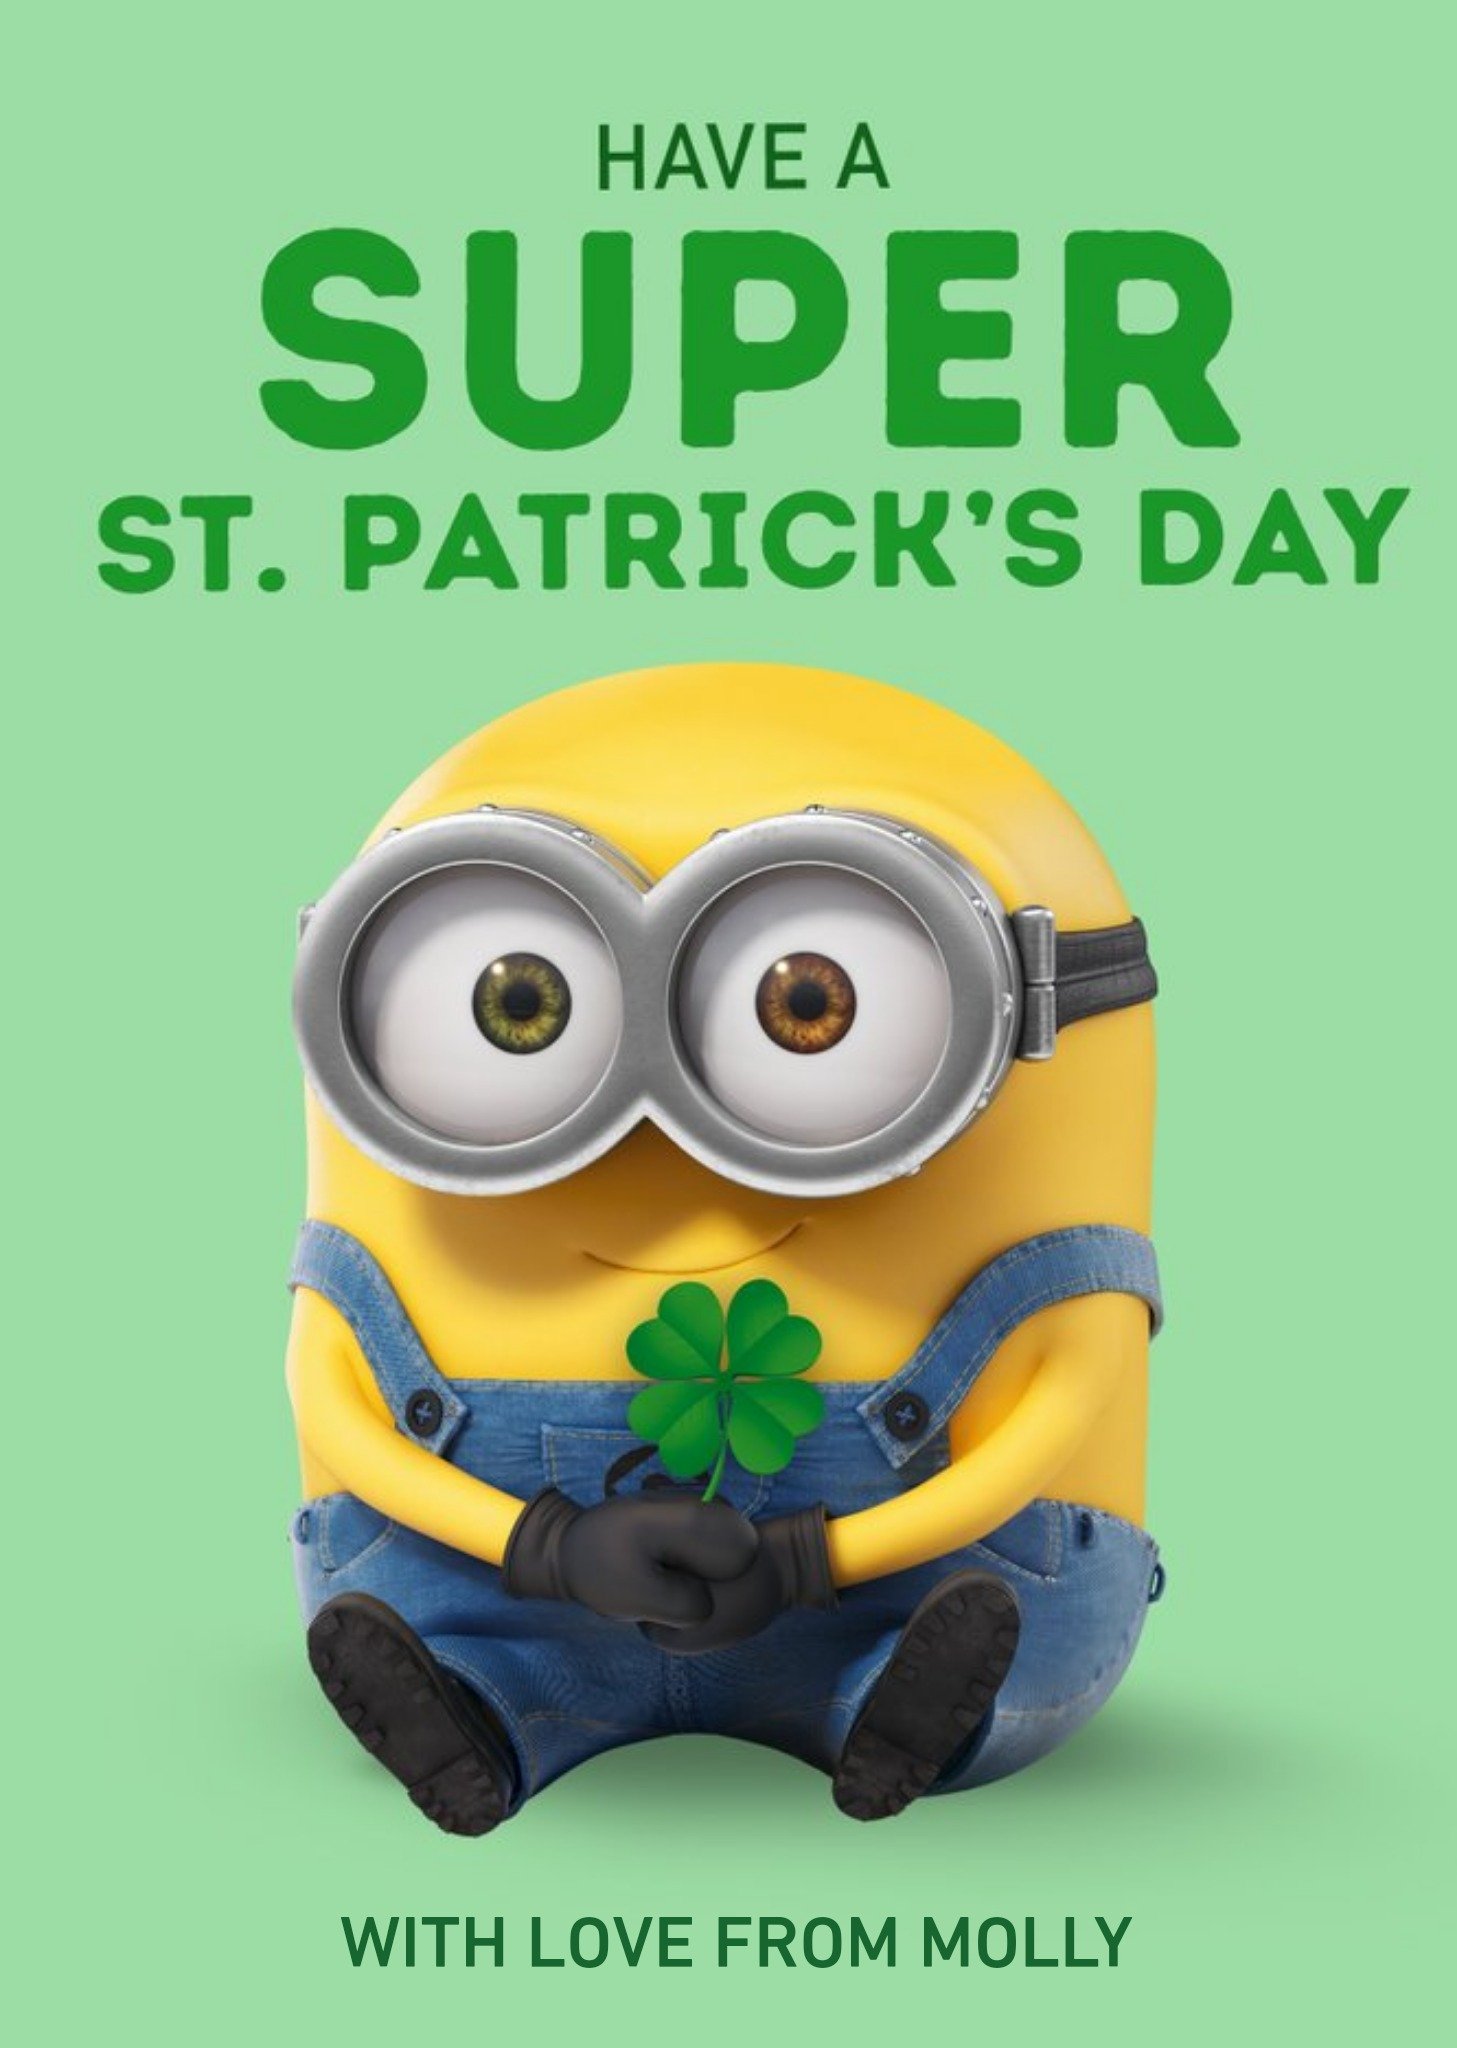 Despicable Me Minions Super St Patrick's Day Card Ecard